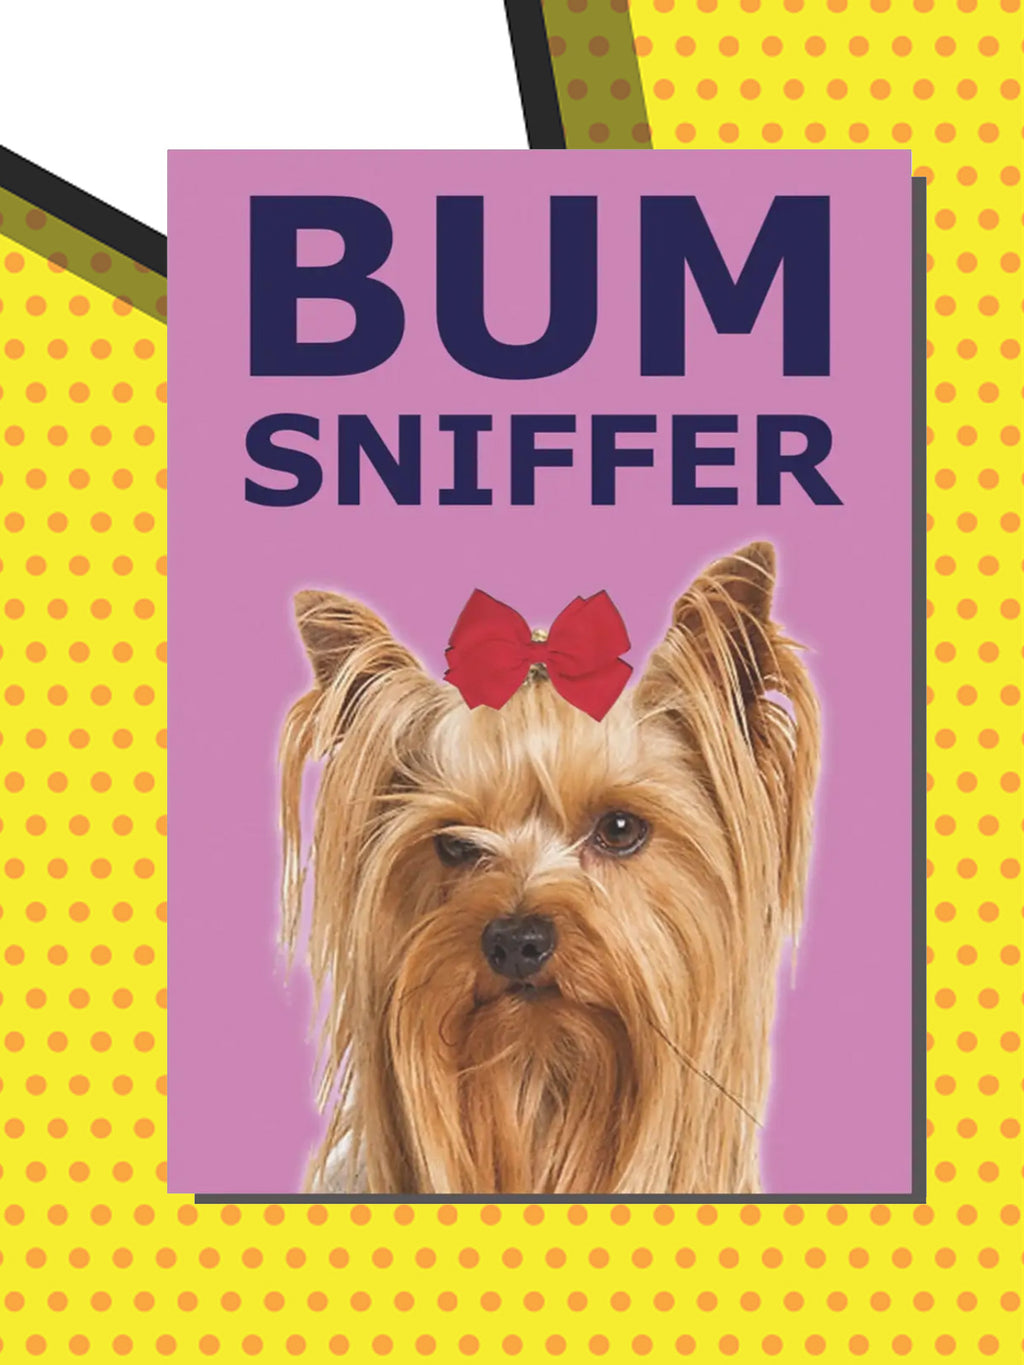 Greeting Card - Bum Sniffer